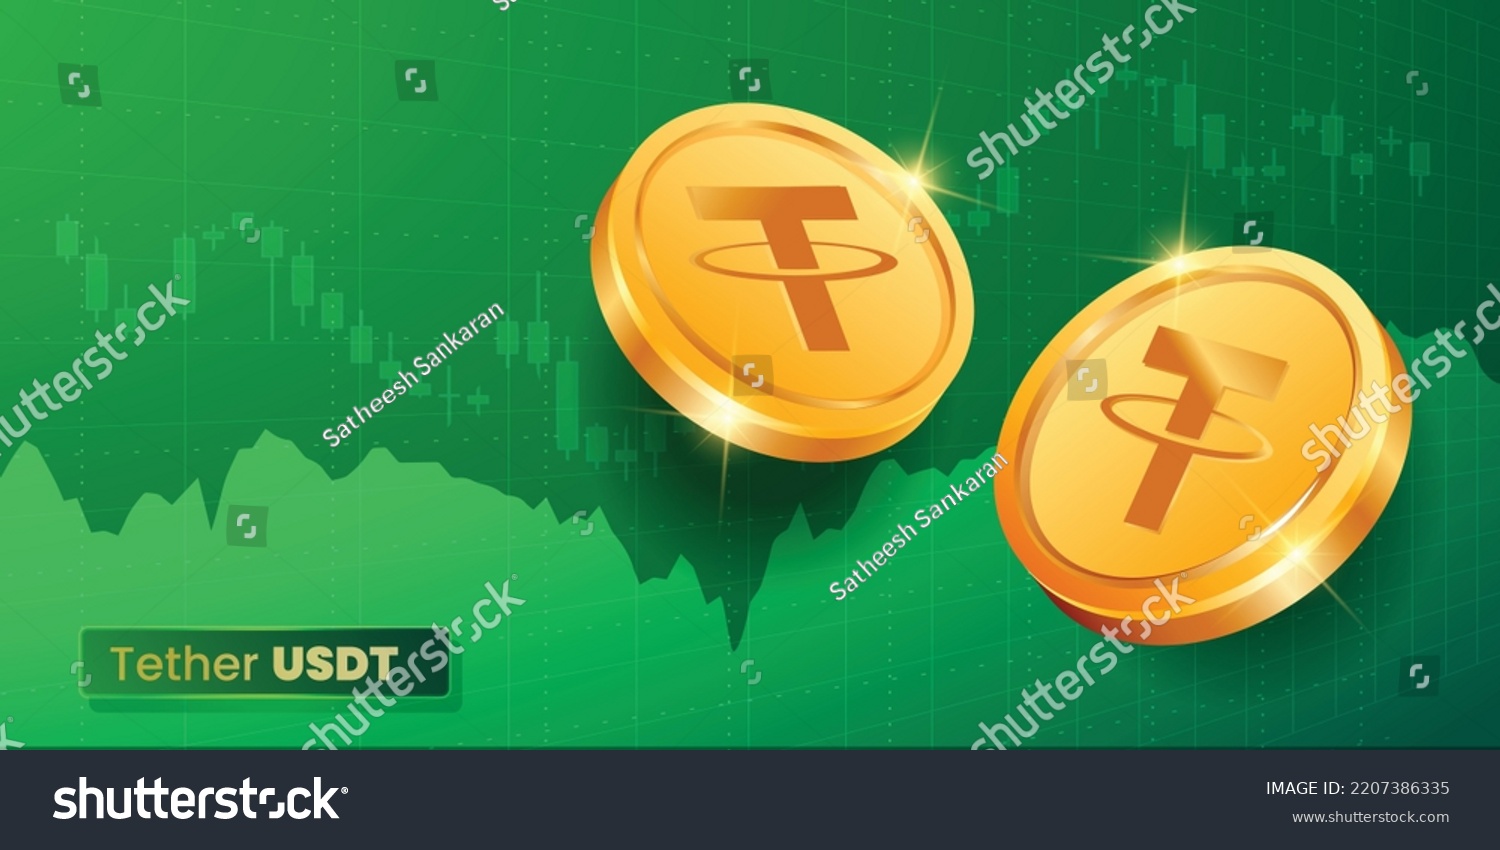 SVG of Tether USDT cryptocurrency coins on financial chart background vector illustration svg